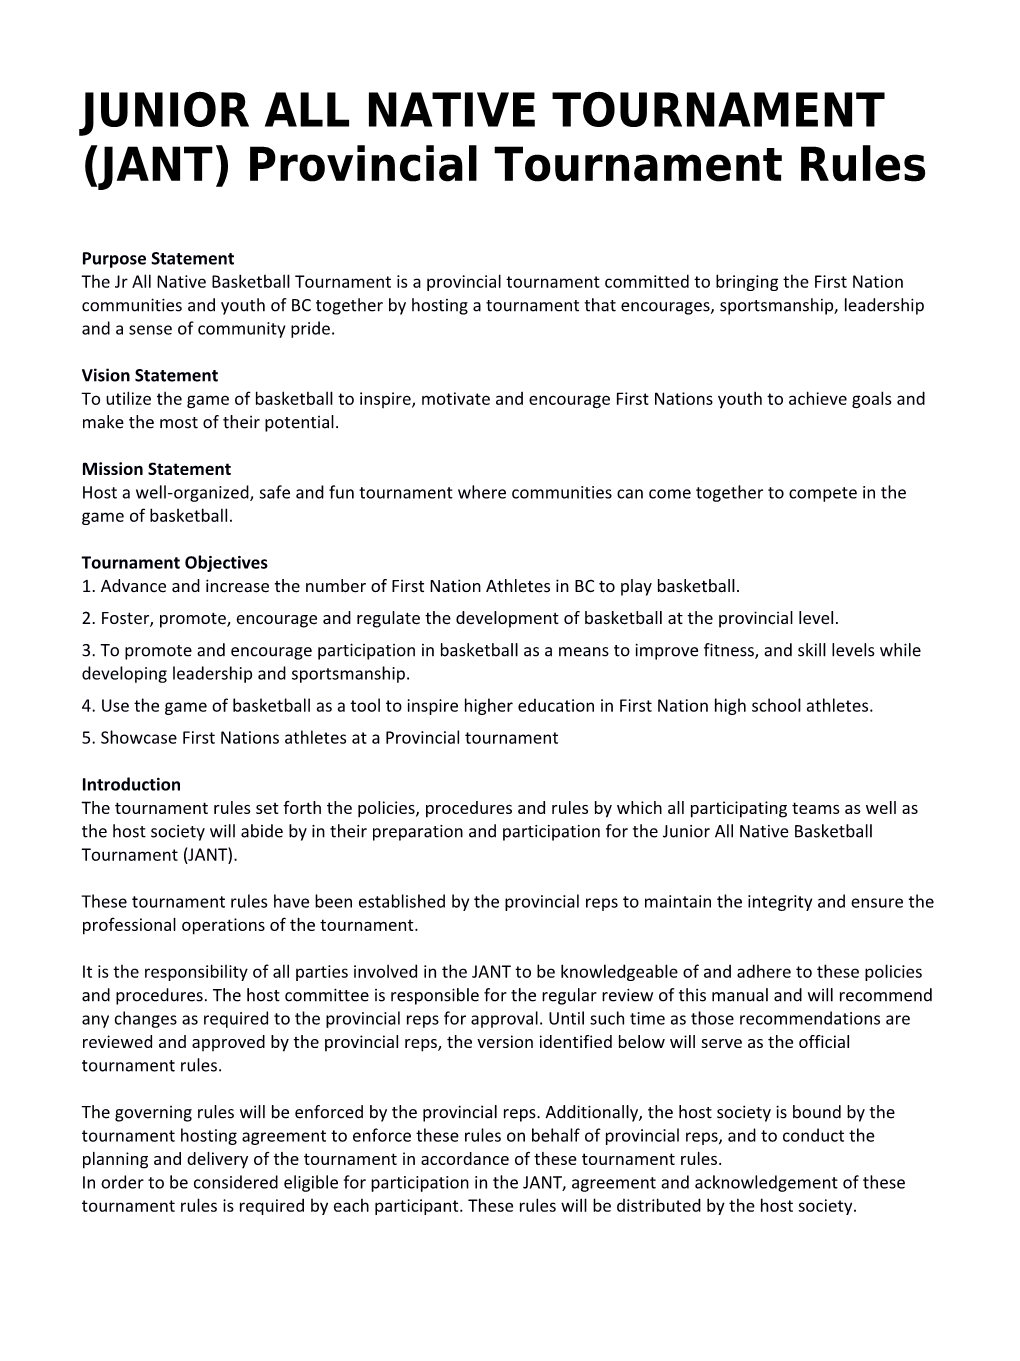 JUNIOR ALL NATIVE TOURNAMENT (JANT) Provincial Tournament Rules